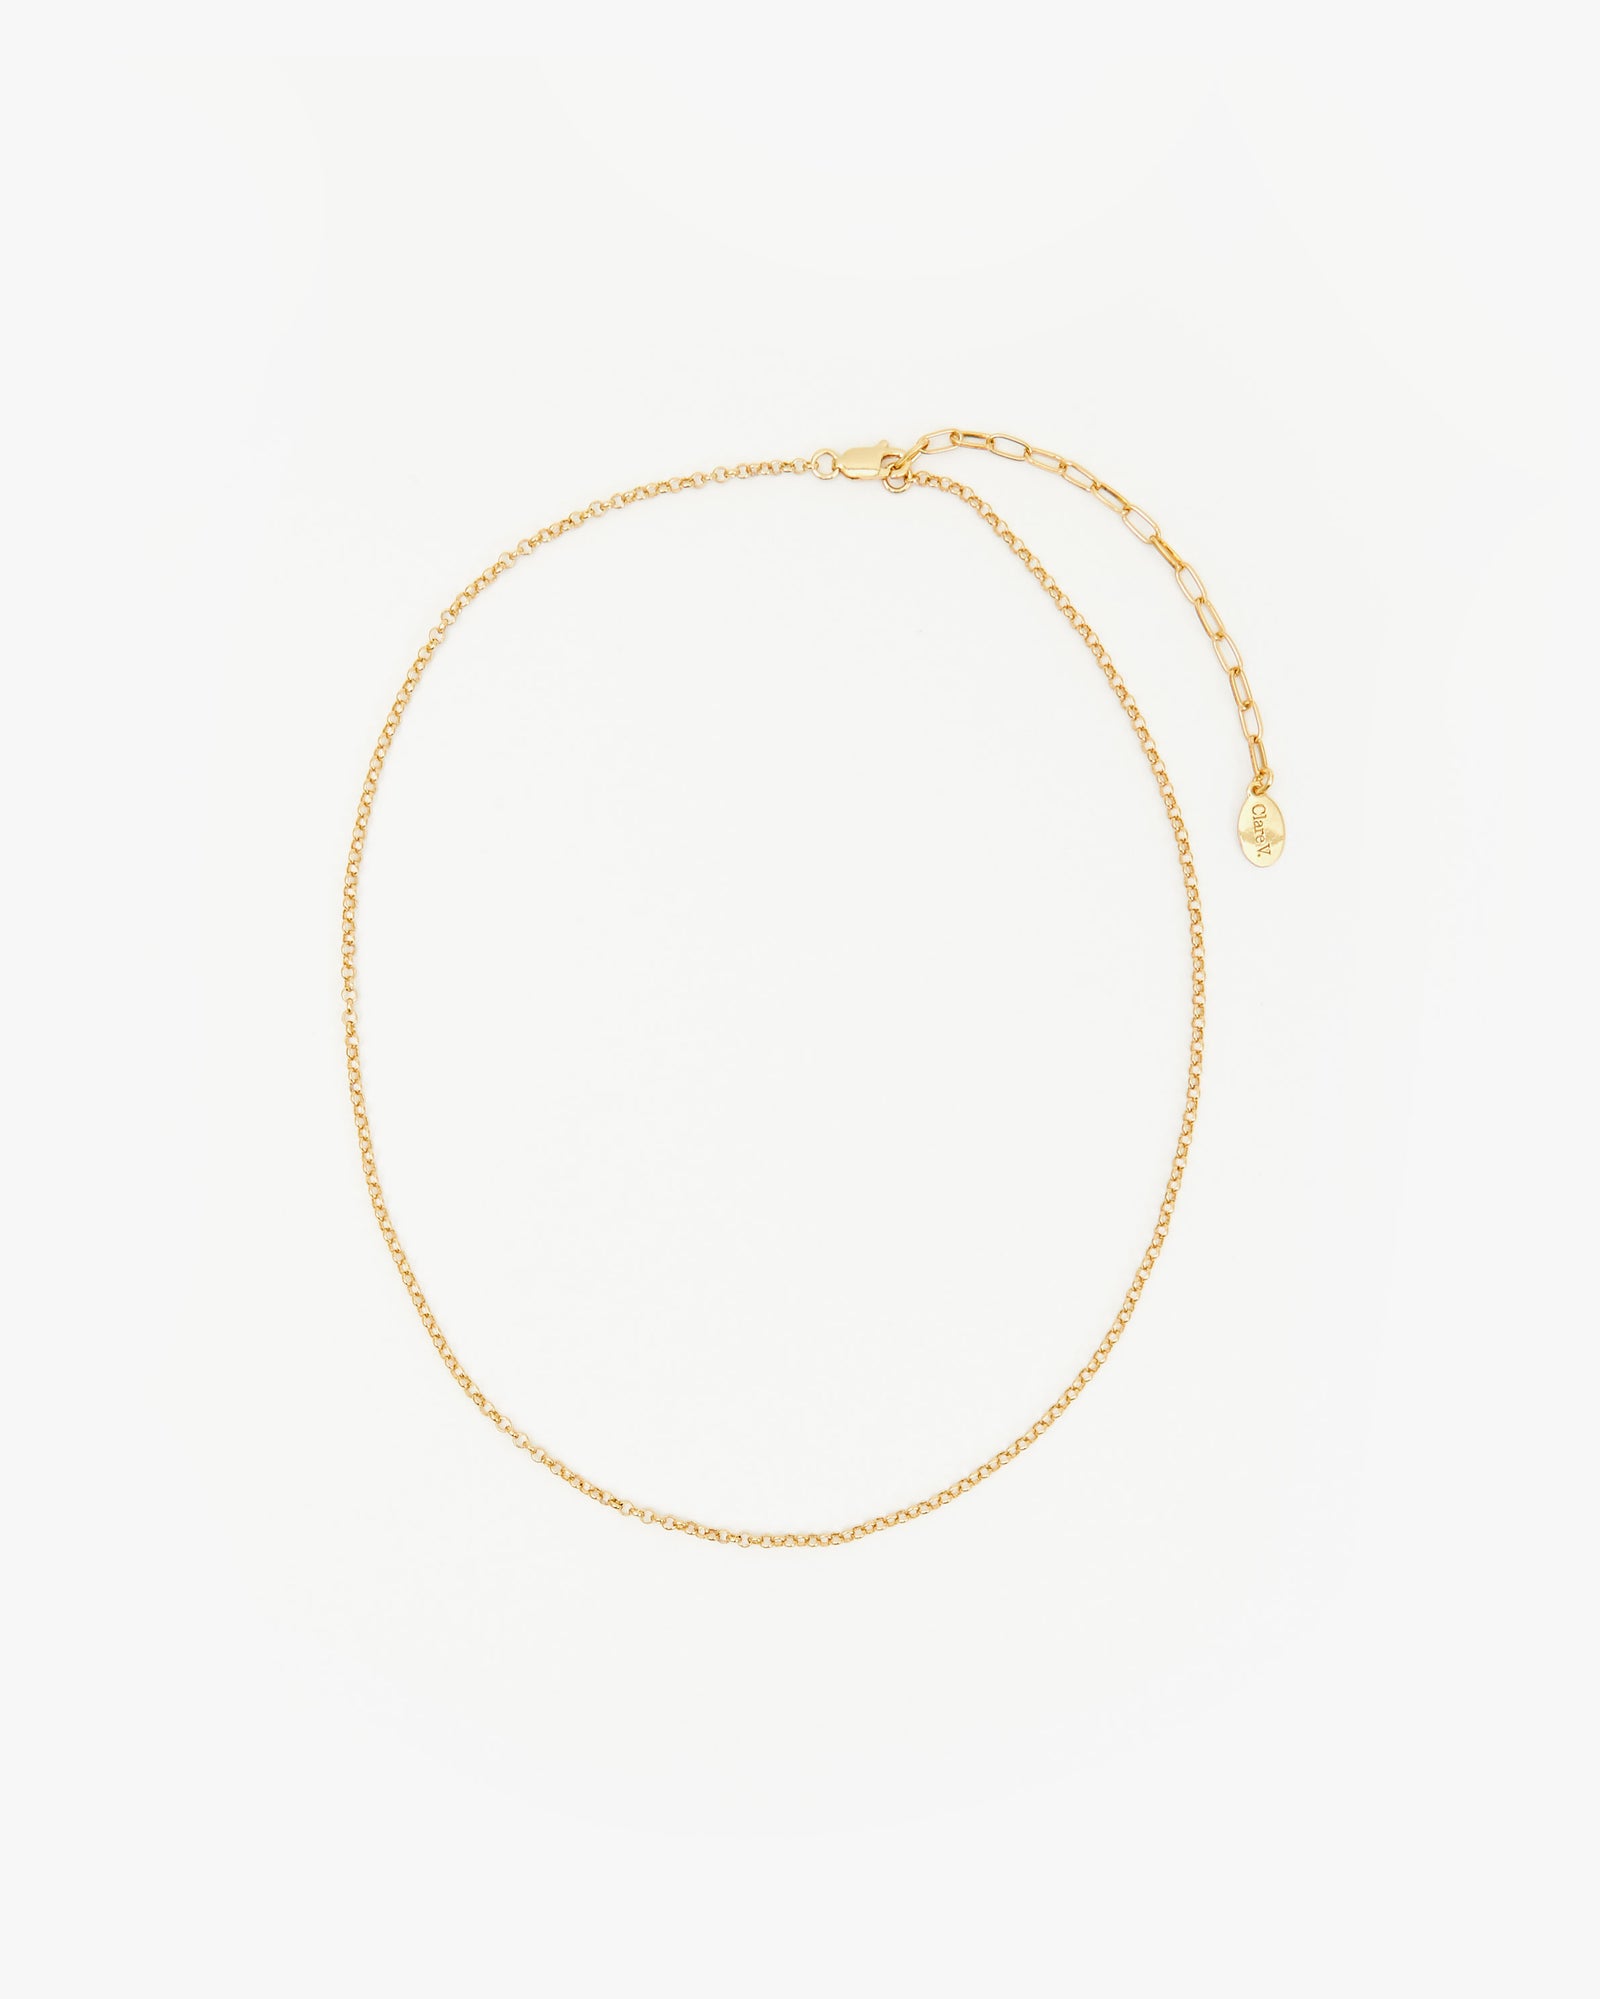 16” Thin Chain Necklace in 18k Gold Vermeil